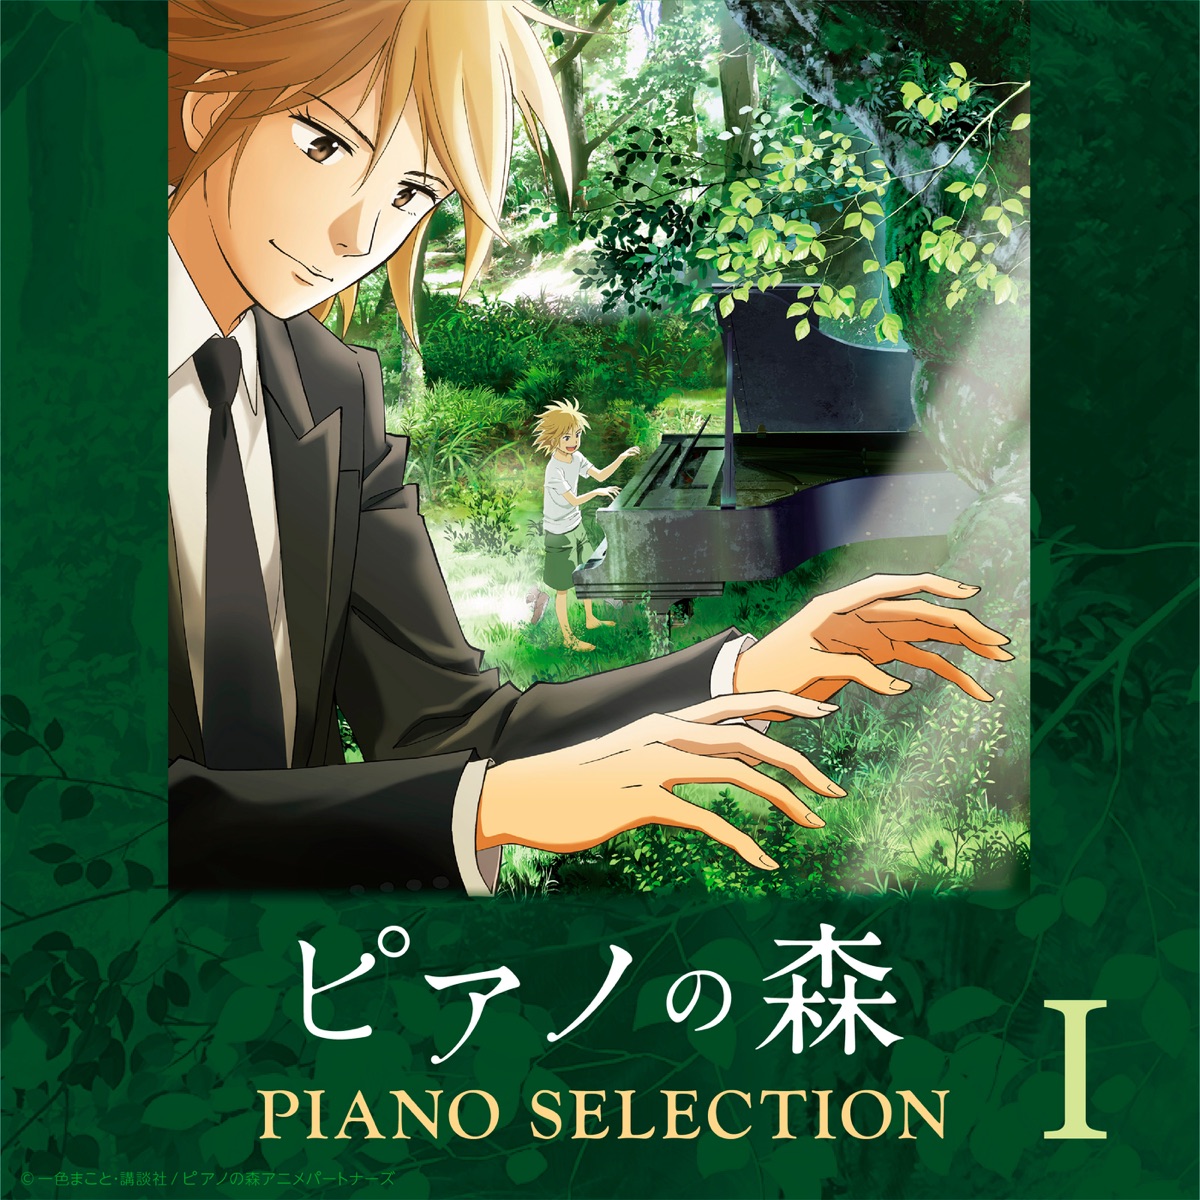 TVアニメ「ピアノの森」 Piano Selection V 海ヘ (TVアニメ「ピアノの